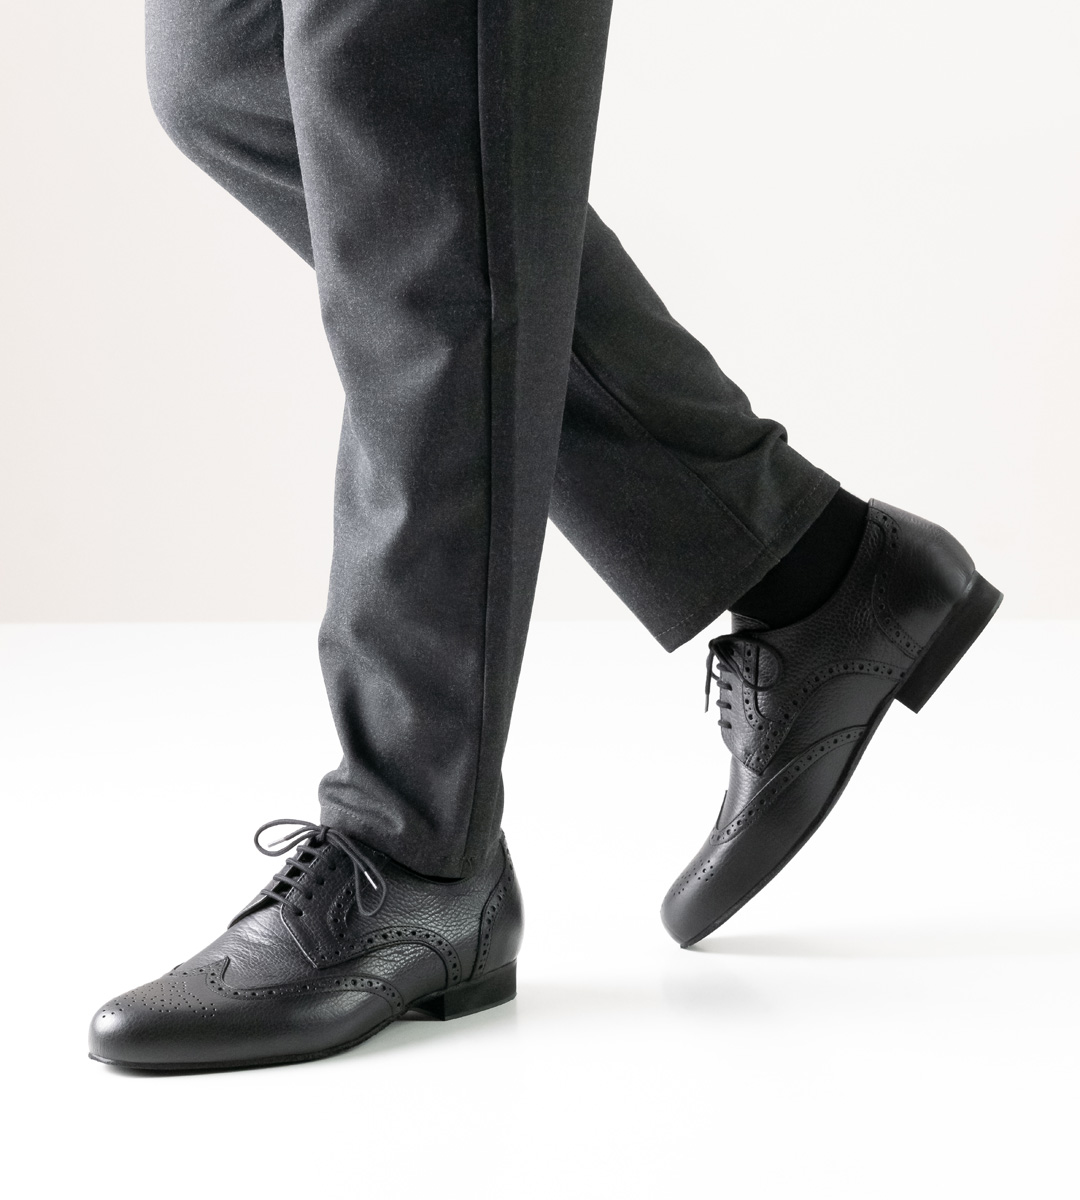 black men's dance shoe by Werner Kern for wide feet